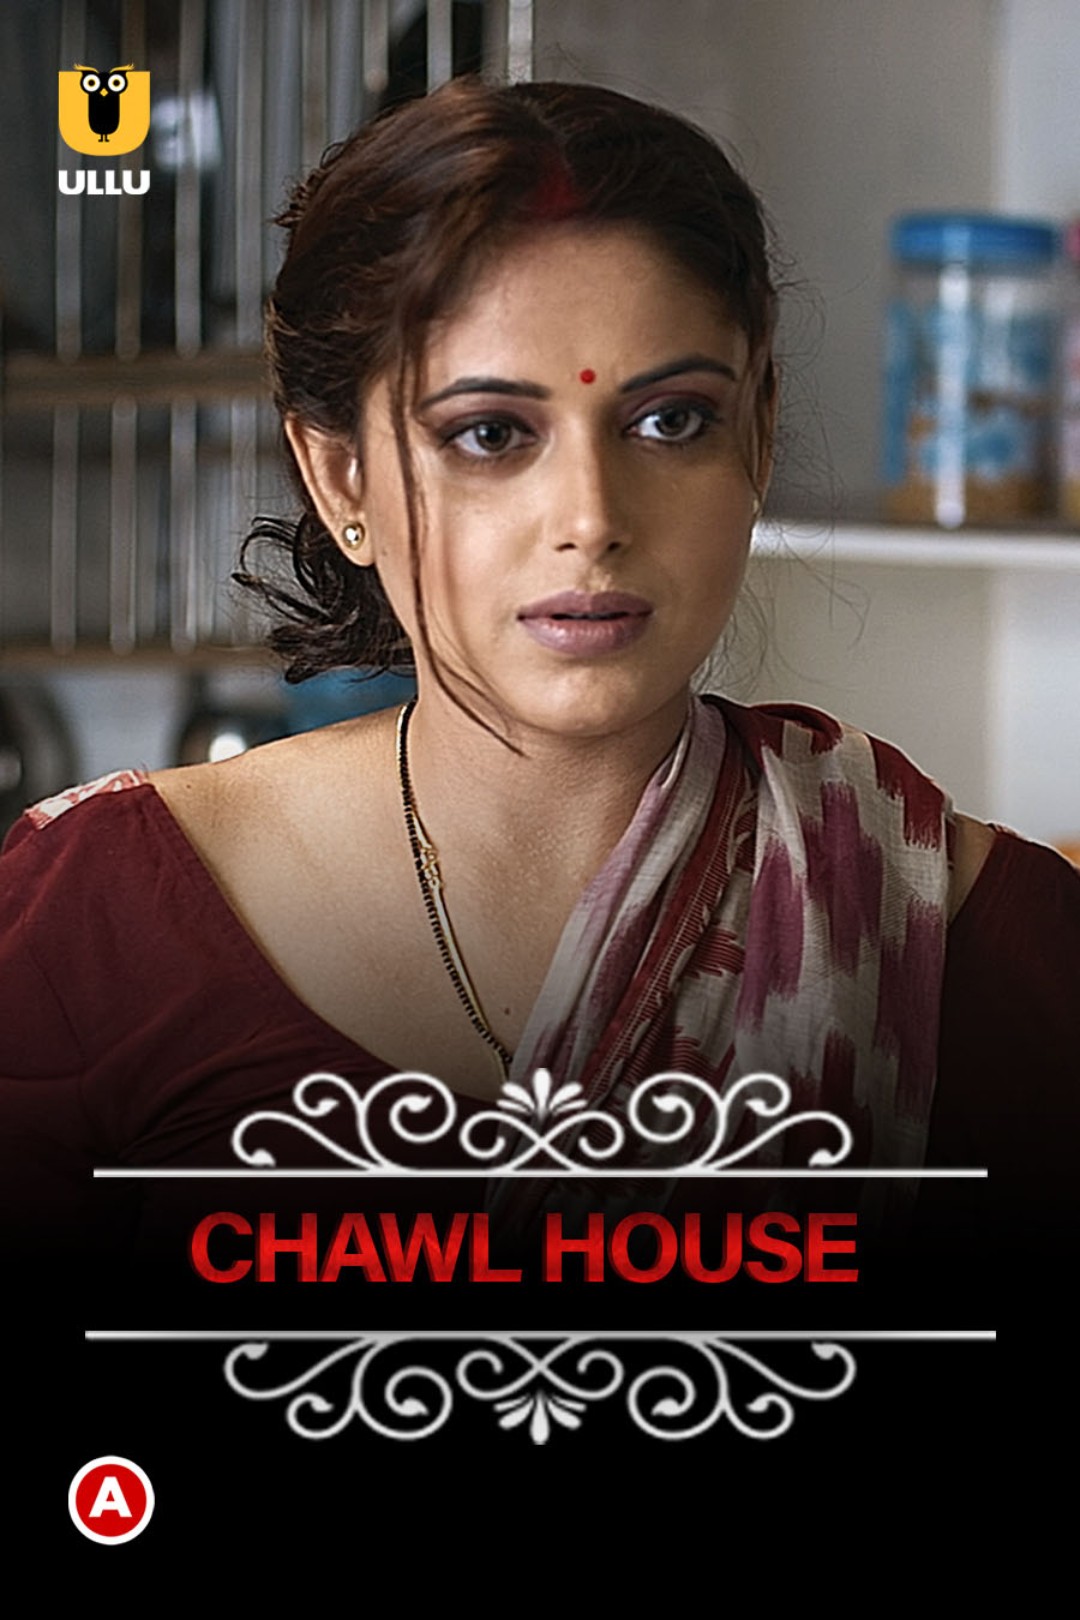 18+ 18 Chawl House (Charmsukh) 2021 S01 Hindi Ullu Originals Complete Web Series 720p HDRip Download